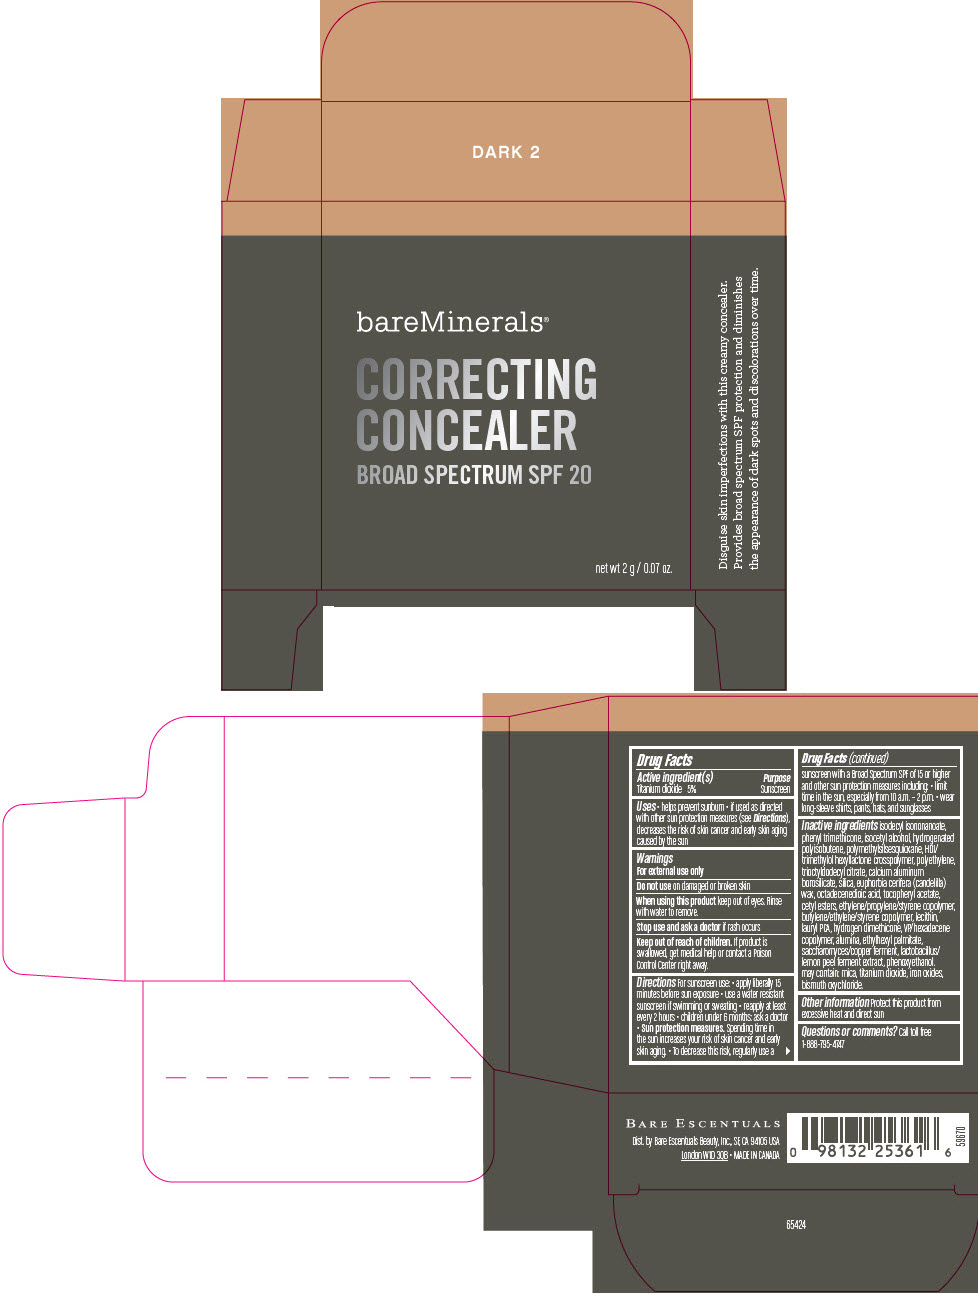 PRINCIPAL DISPLAY PANEL - 2 g Container Carton - Dark 2